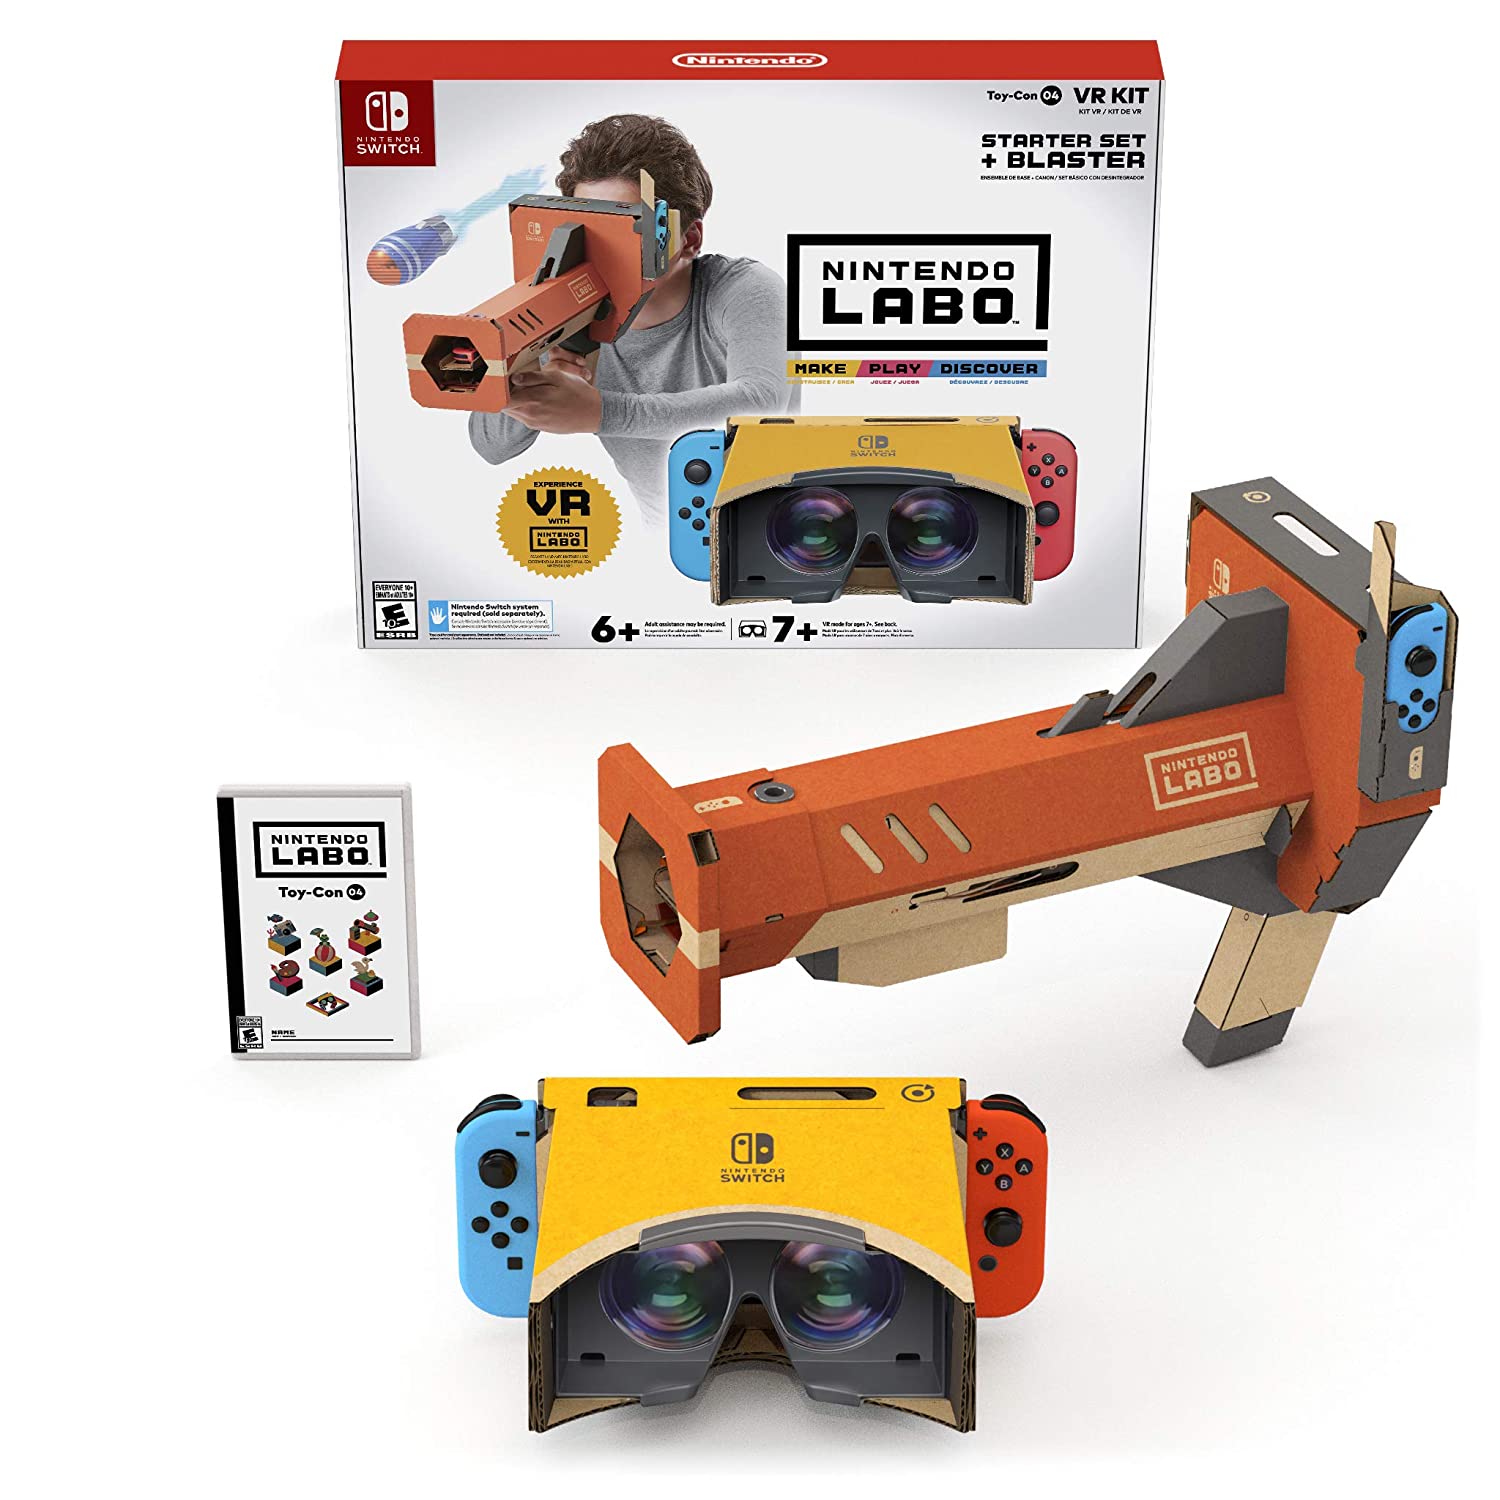 Nintendo Labo ToyCon 04 VR Kit Only 19.99! (reg. 39.99) a